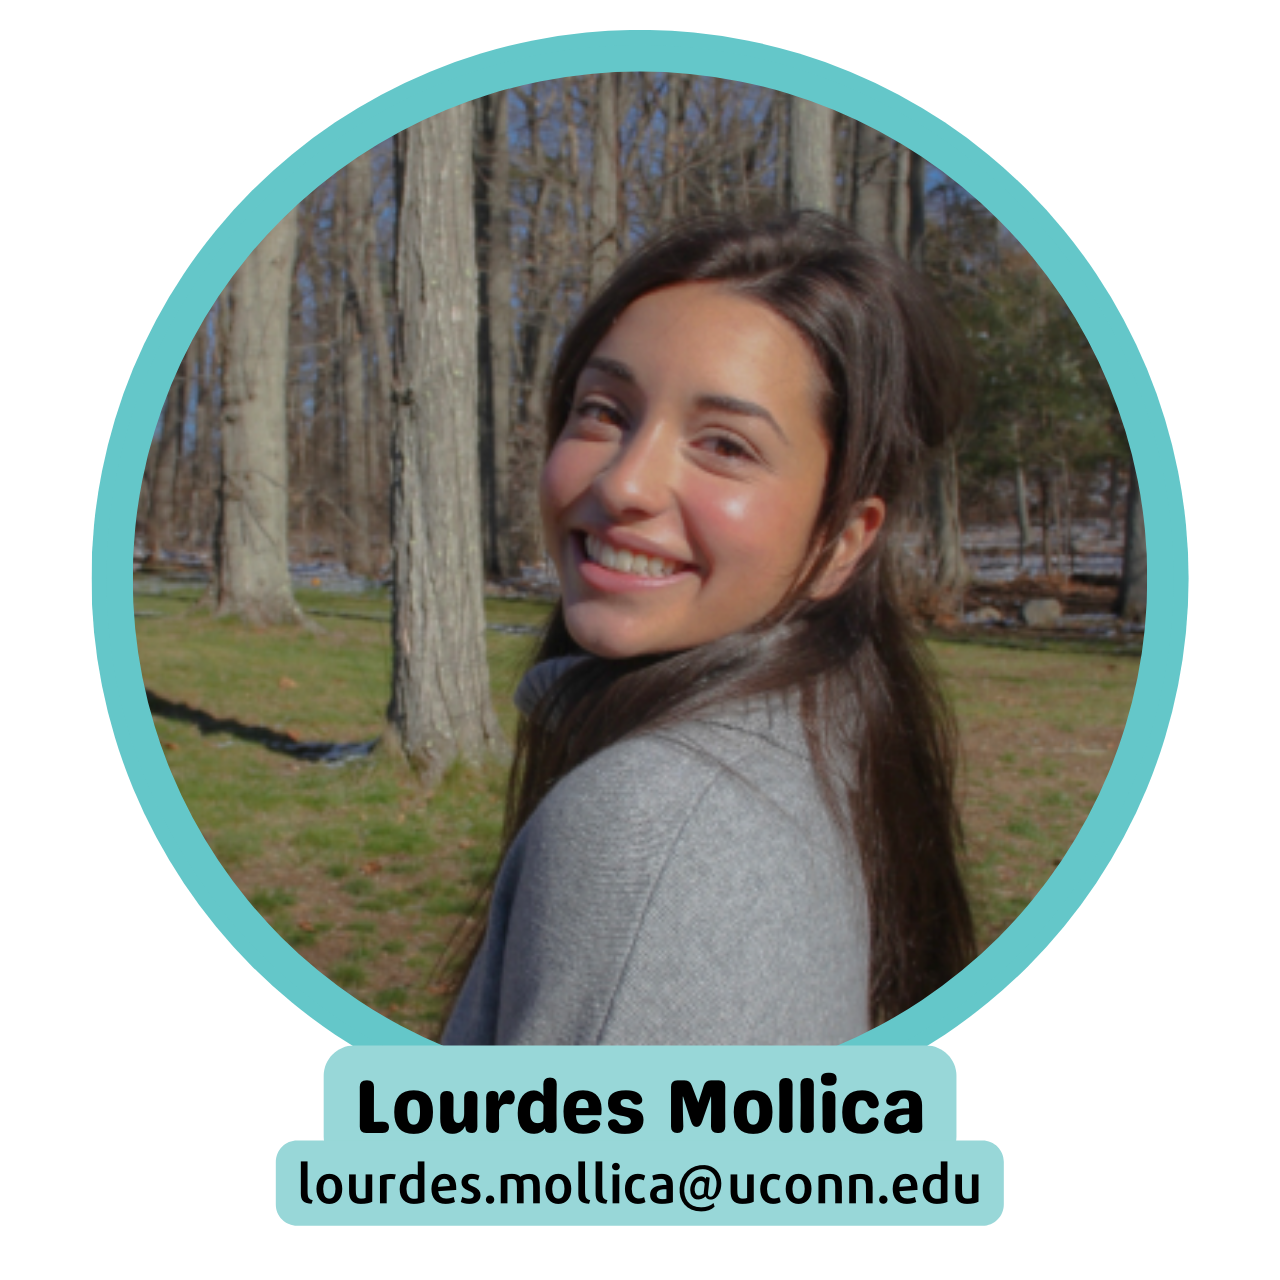 Lourdes Mollica